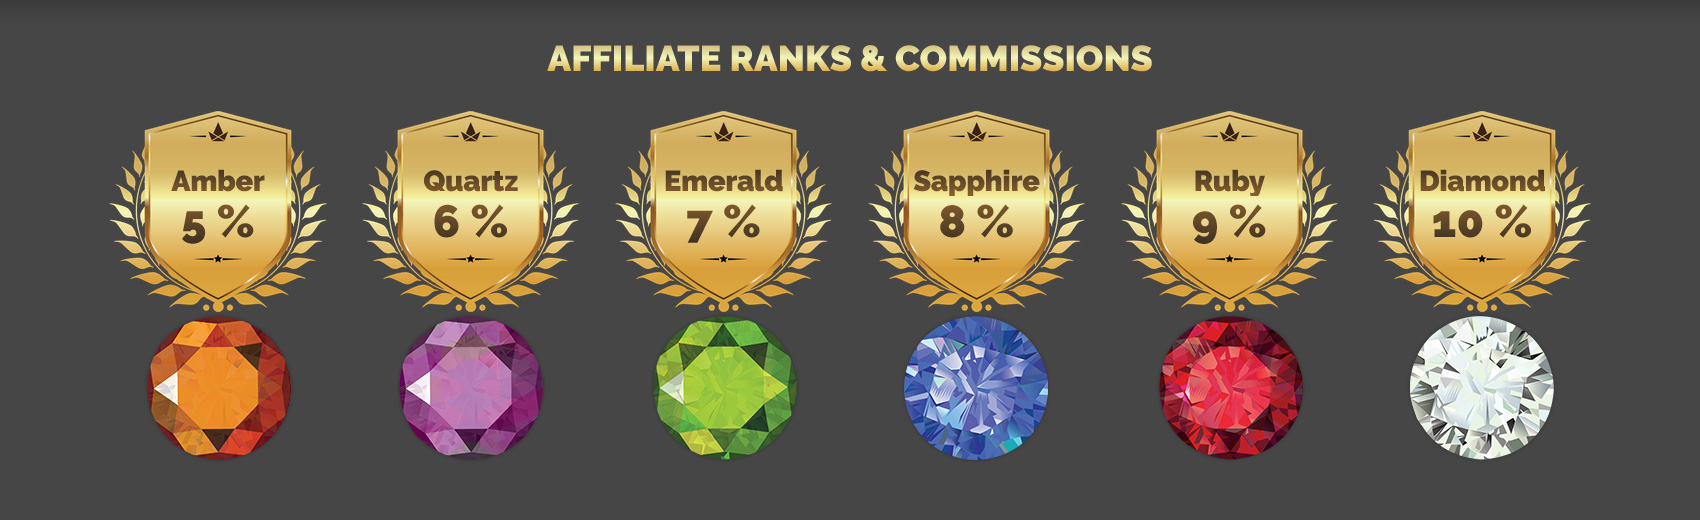 aff-ranks-commissions.jpg